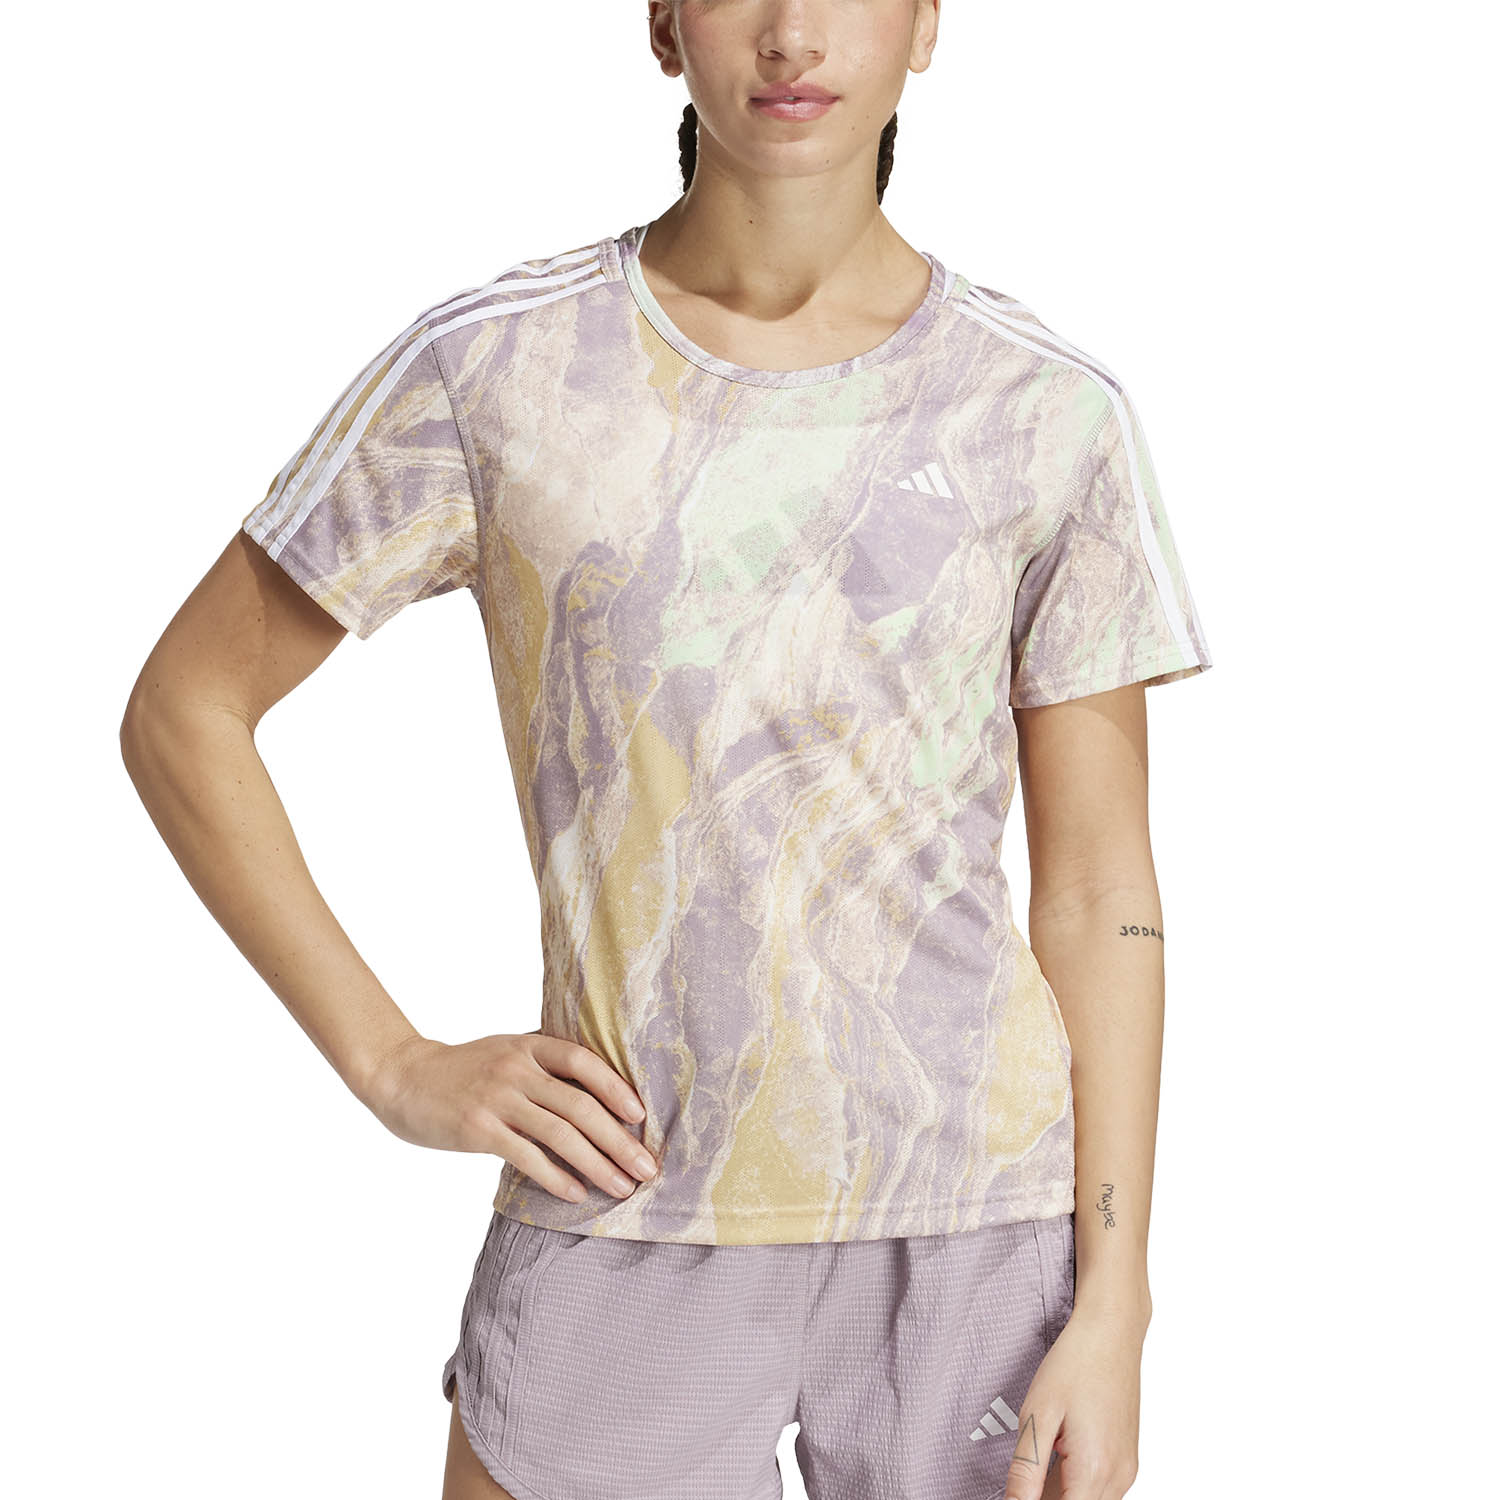 adidas MFTP Airchill T-Shirt - Crystal Sand/Preloved Fig/Semi Green Spark/Oat